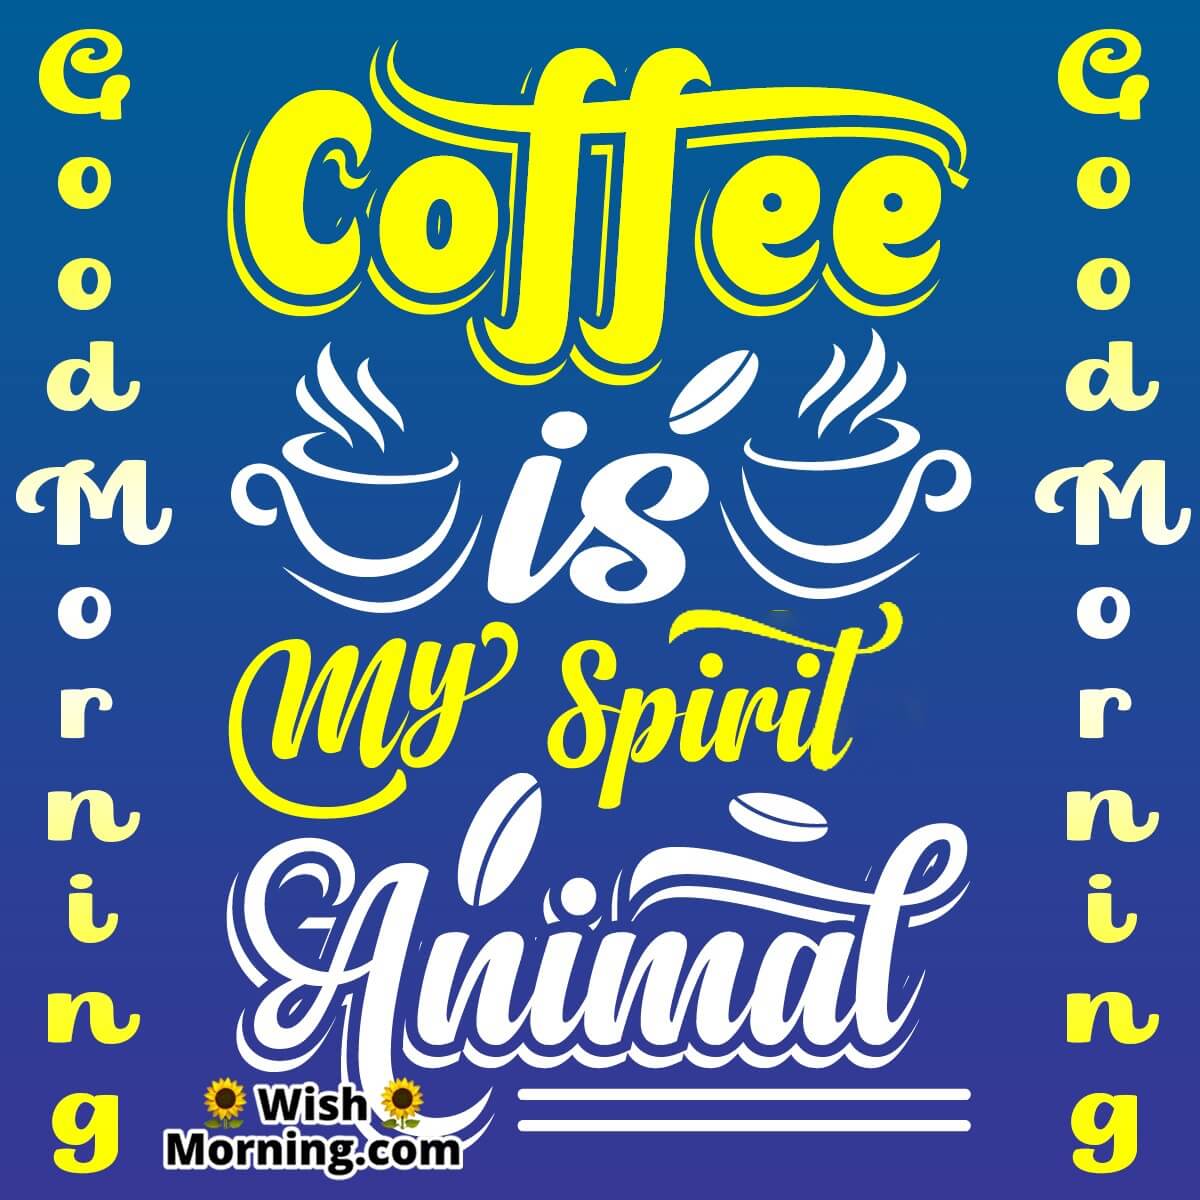 Coffee Is My Spirit Animal